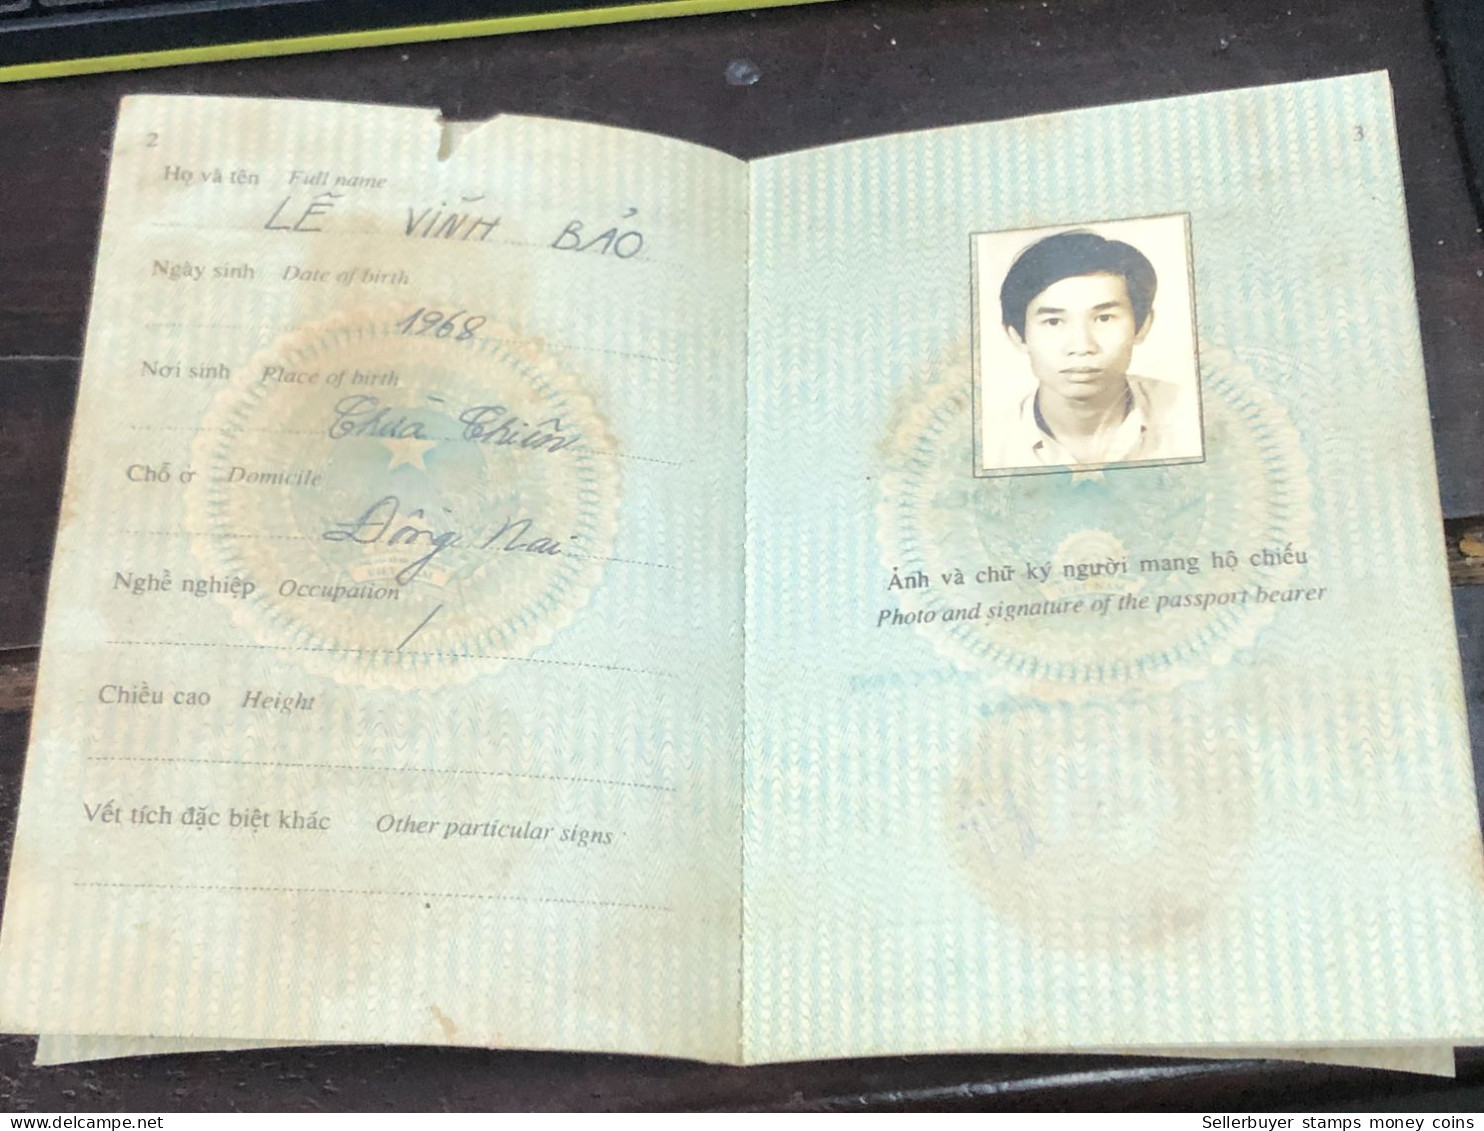 VIET NAM -OLD-ID PASSPORT-name-LE VINH BAO-1996-1pcs Book - Verzamelingen